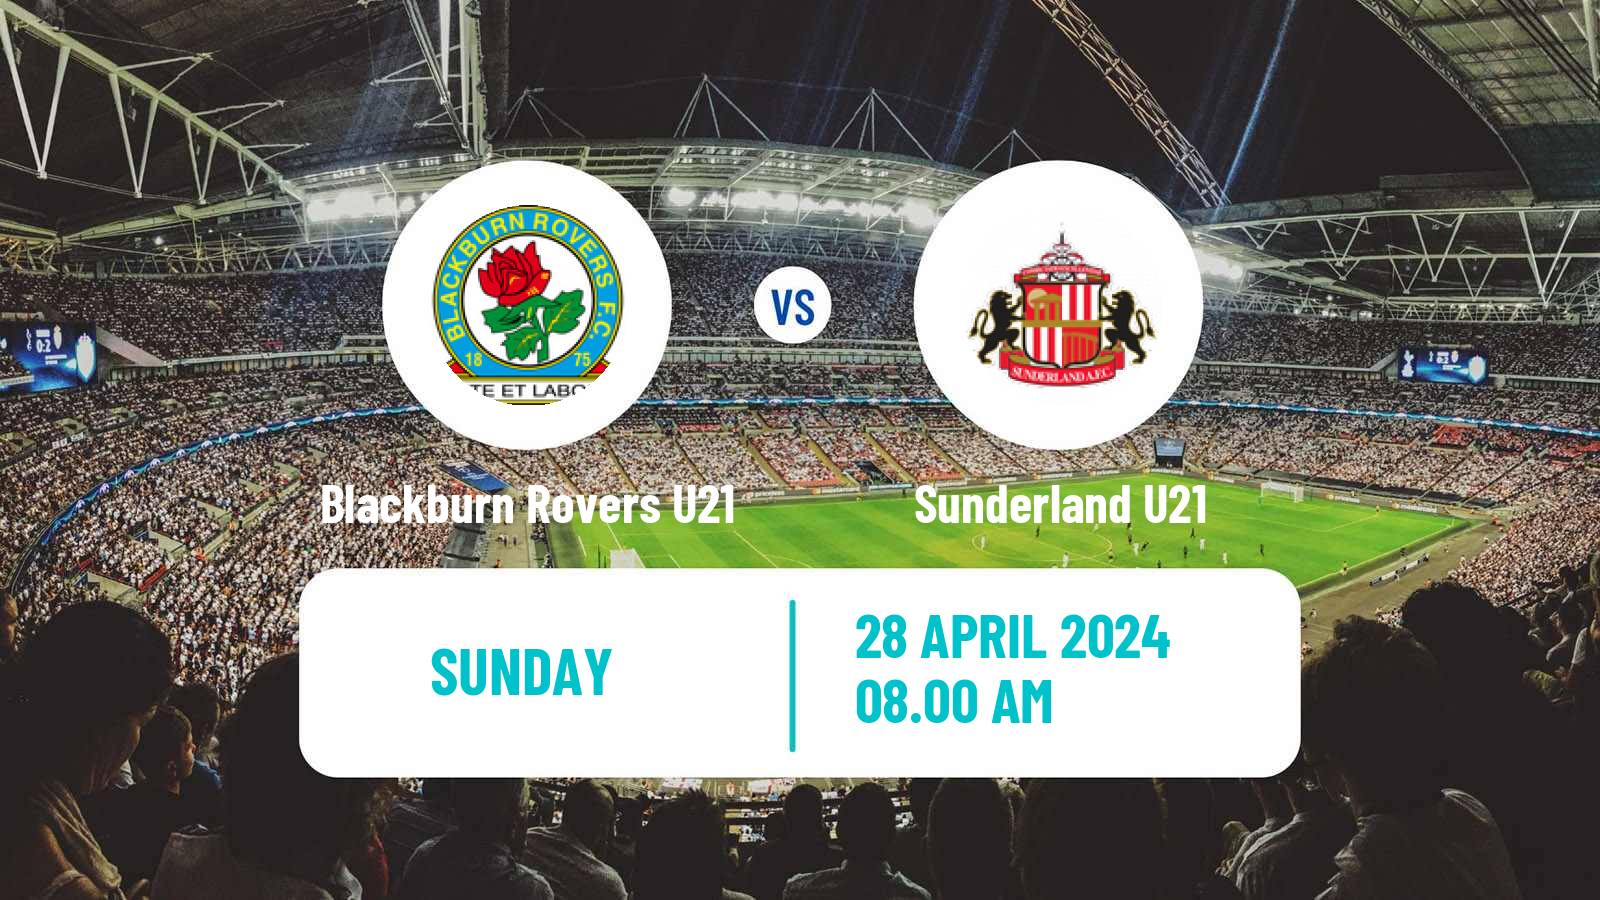 Soccer English Premier League 2 Blackburn Rovers U21 - Sunderland U21